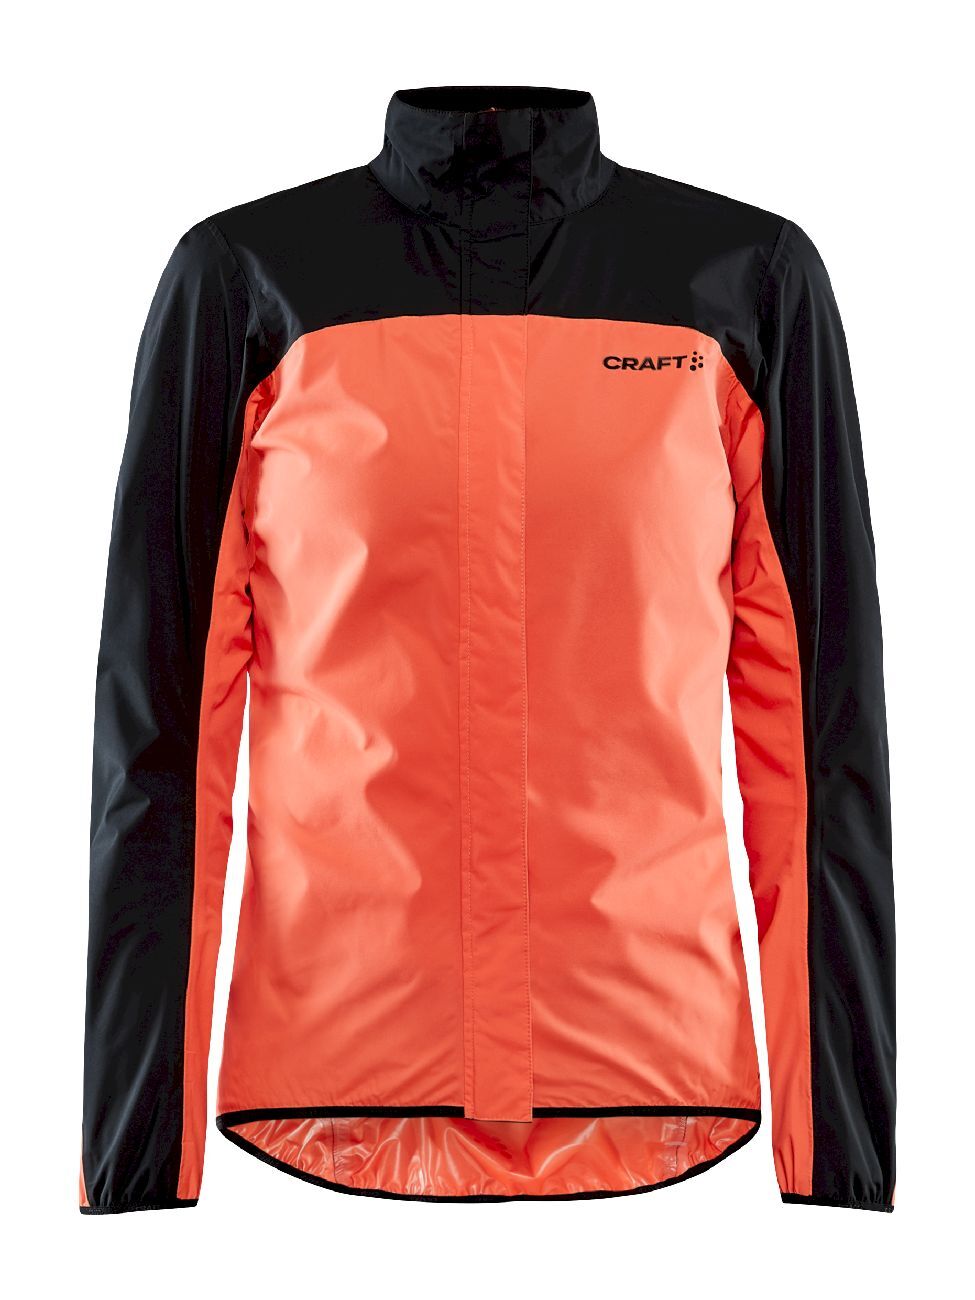 Craft Core Endur Hydro JKT - Cycling jacket - Women's